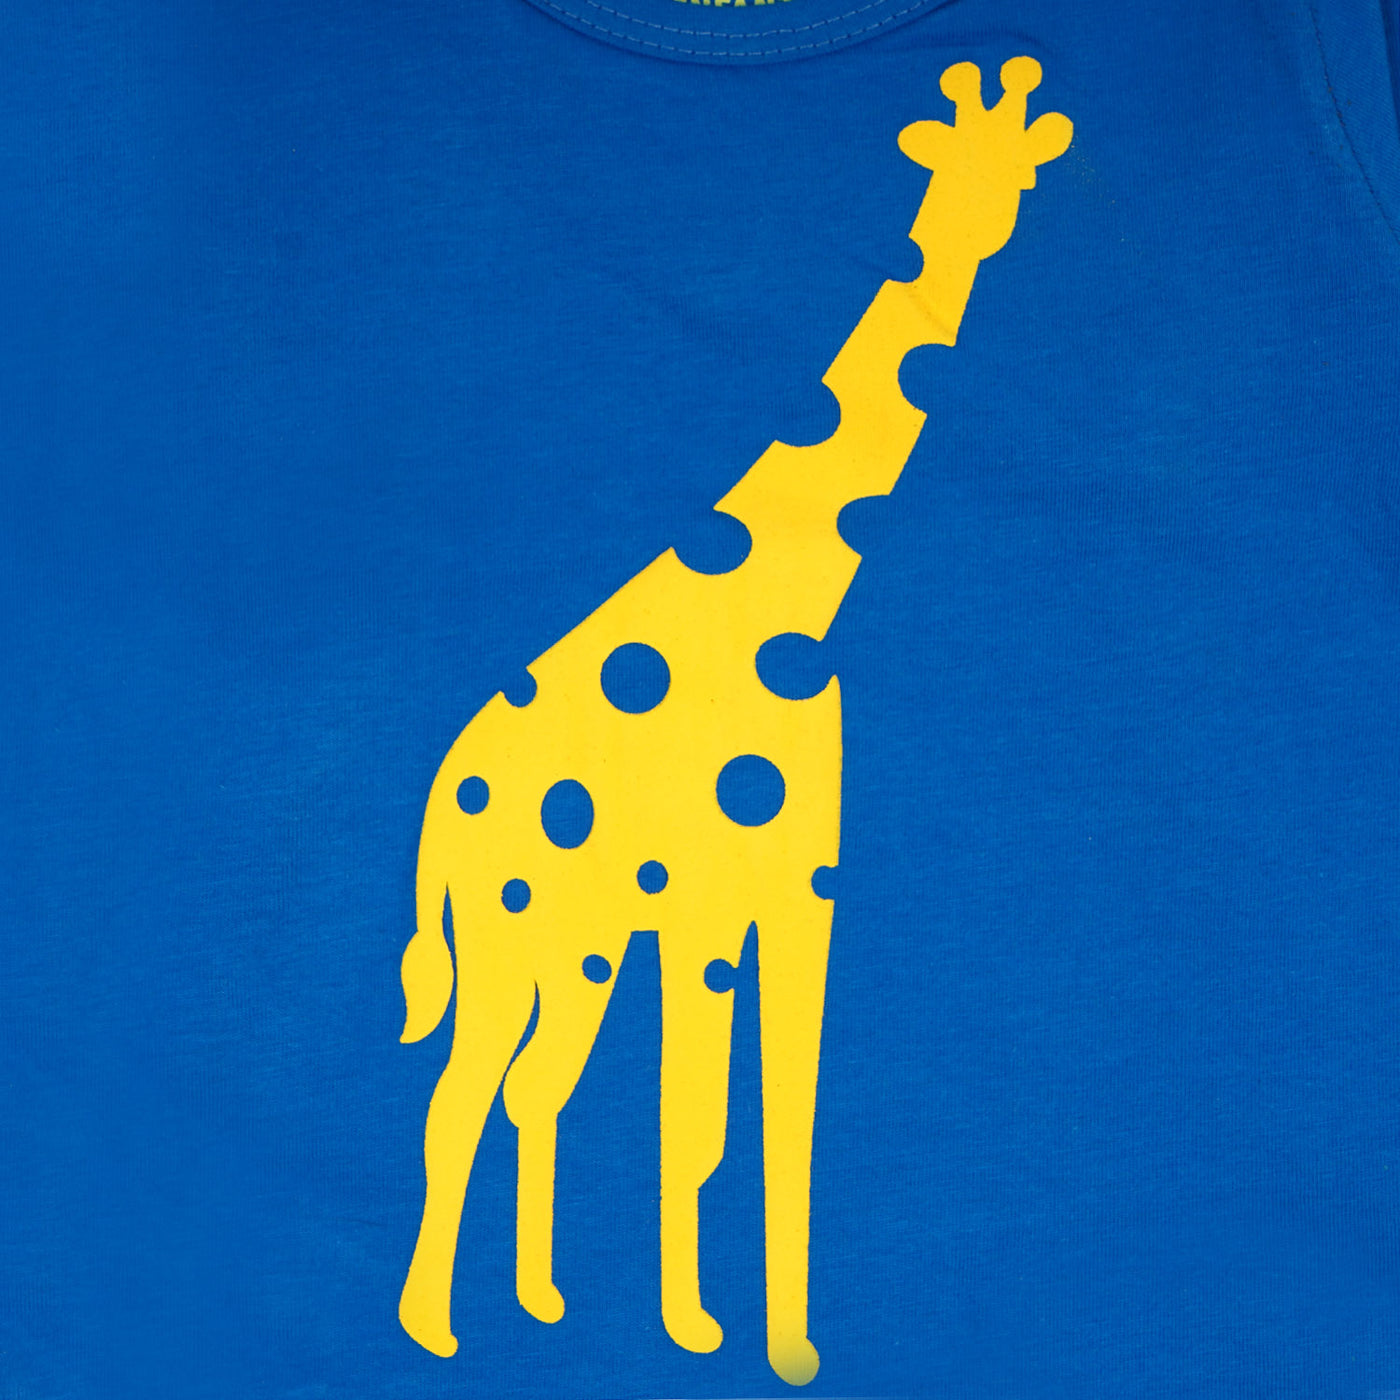 Infant Boys T-Shirt Giraffe - Royal Blue